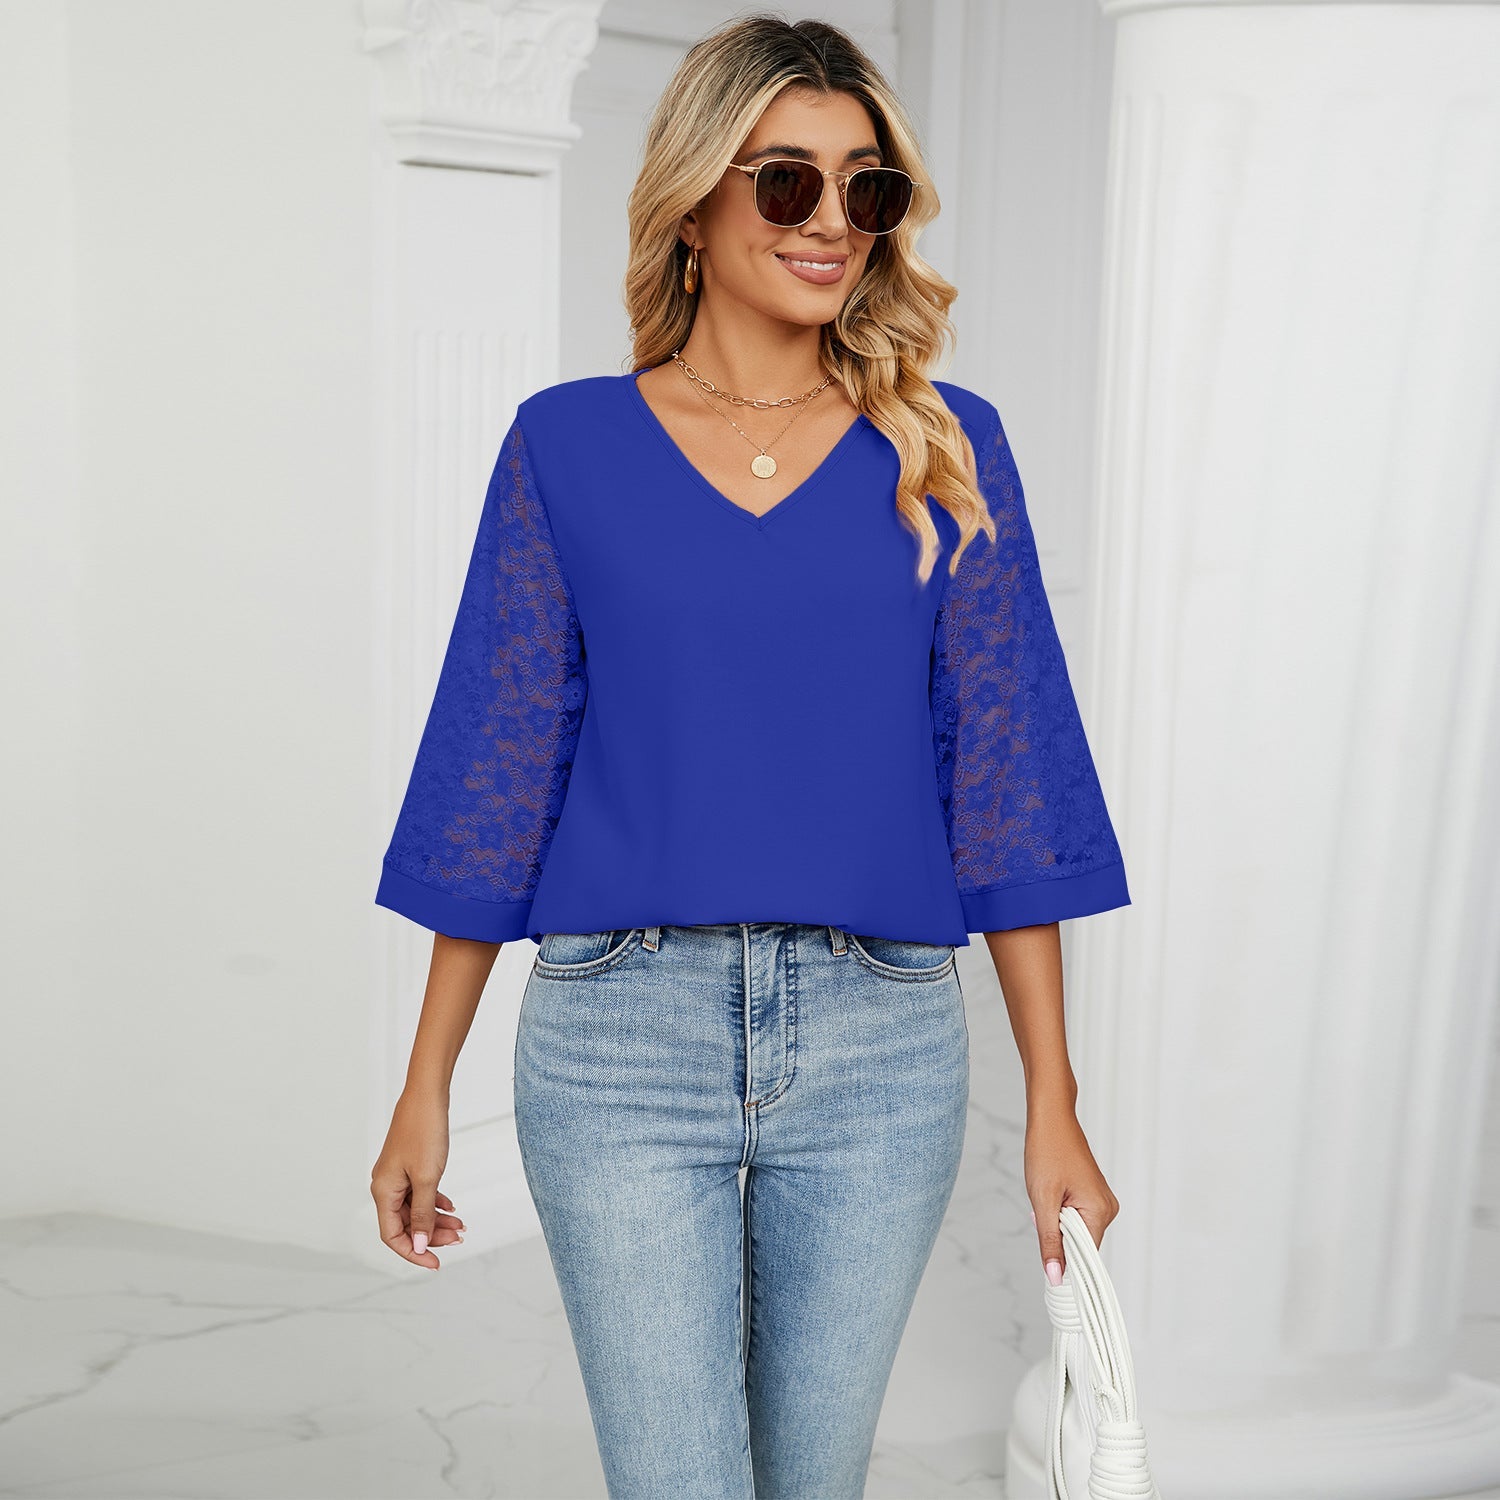 Fashion Summer Chiffon 3/4 Sleeves Women Blouses-Shirts & Tops-Blue-S-Free Shipping Leatheretro